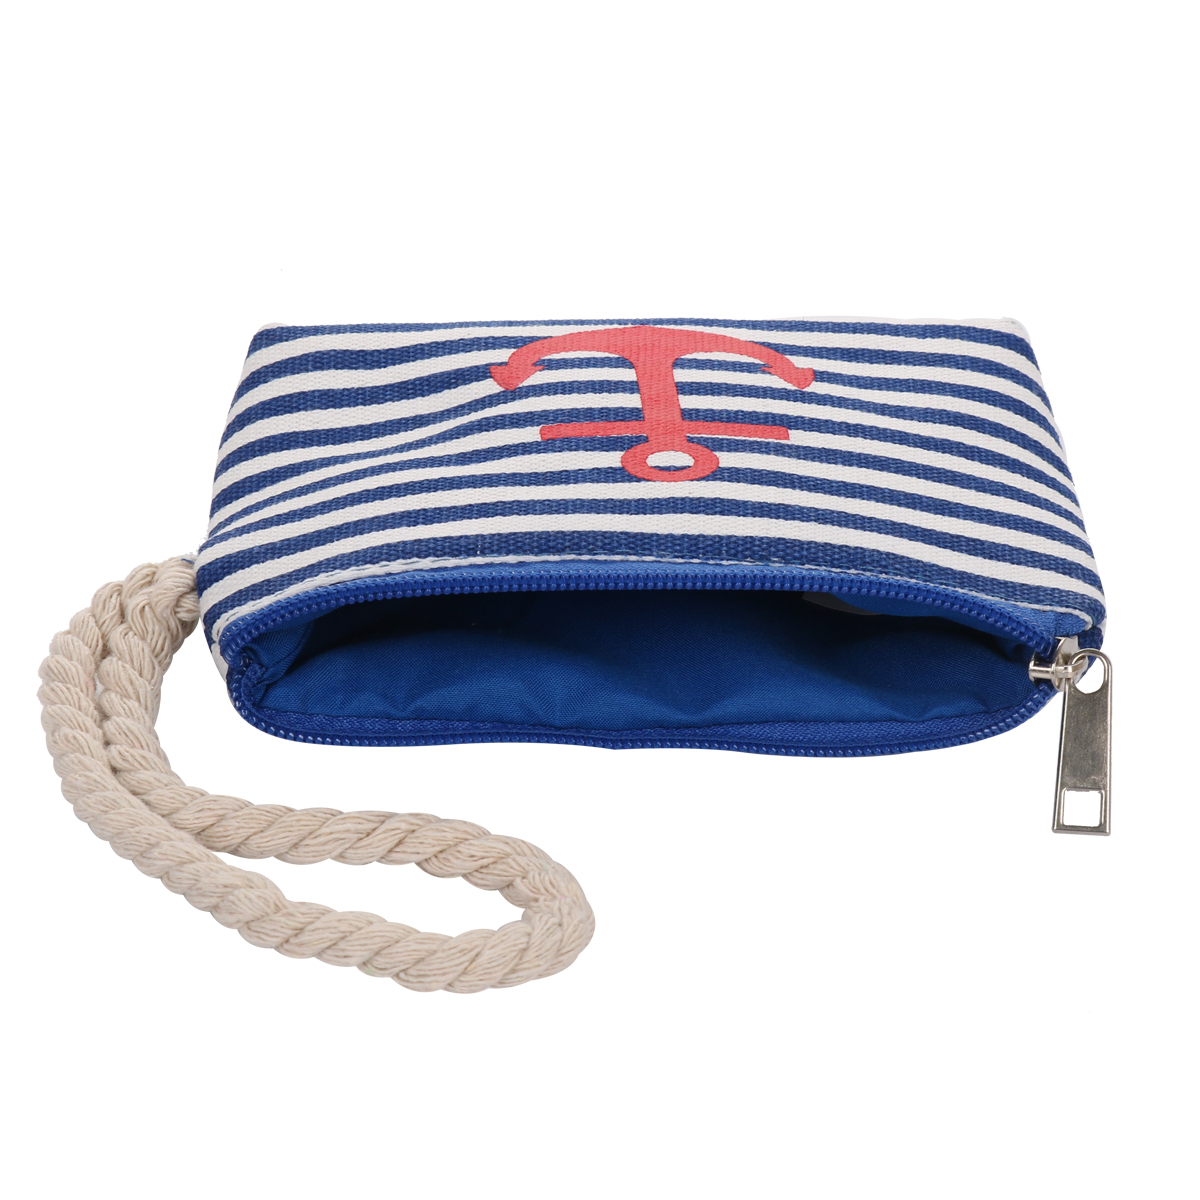 Sonia Originelli Geldbeutel Anker Mini Tasche Maritim Streifen Kordel Farbe Blau-Rot 